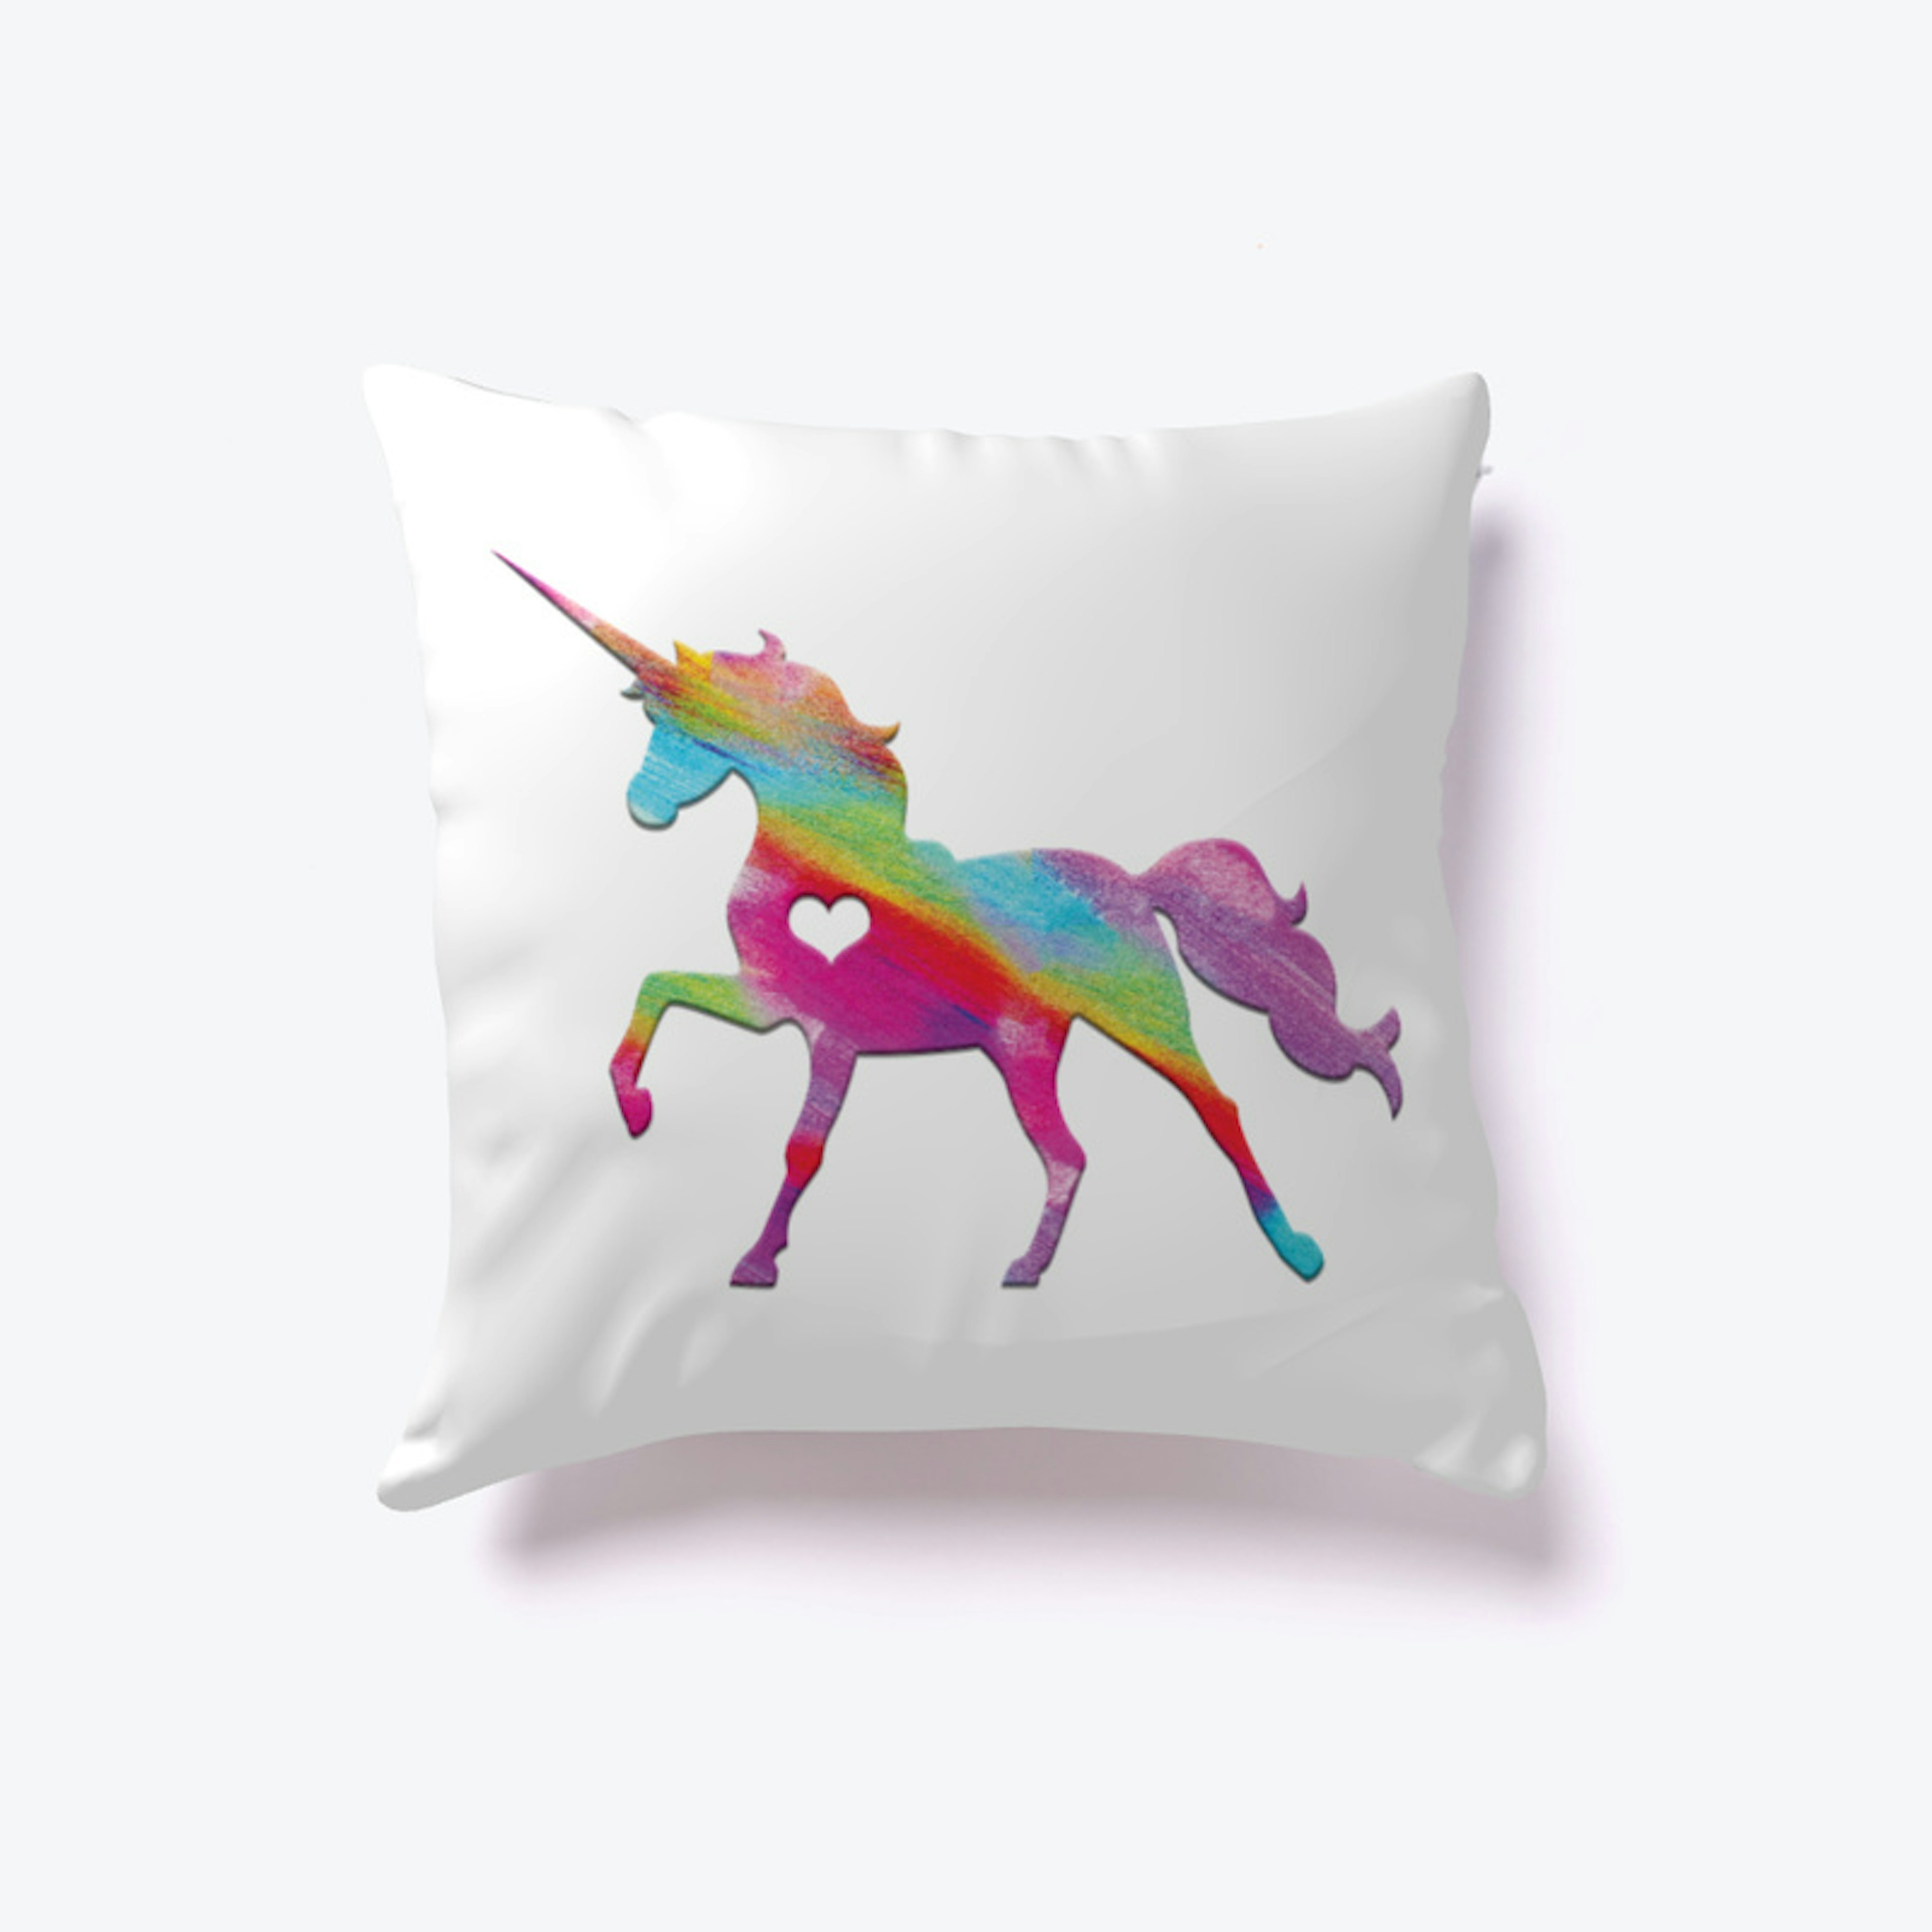 Rainbow Unicorn with Heart Pillow